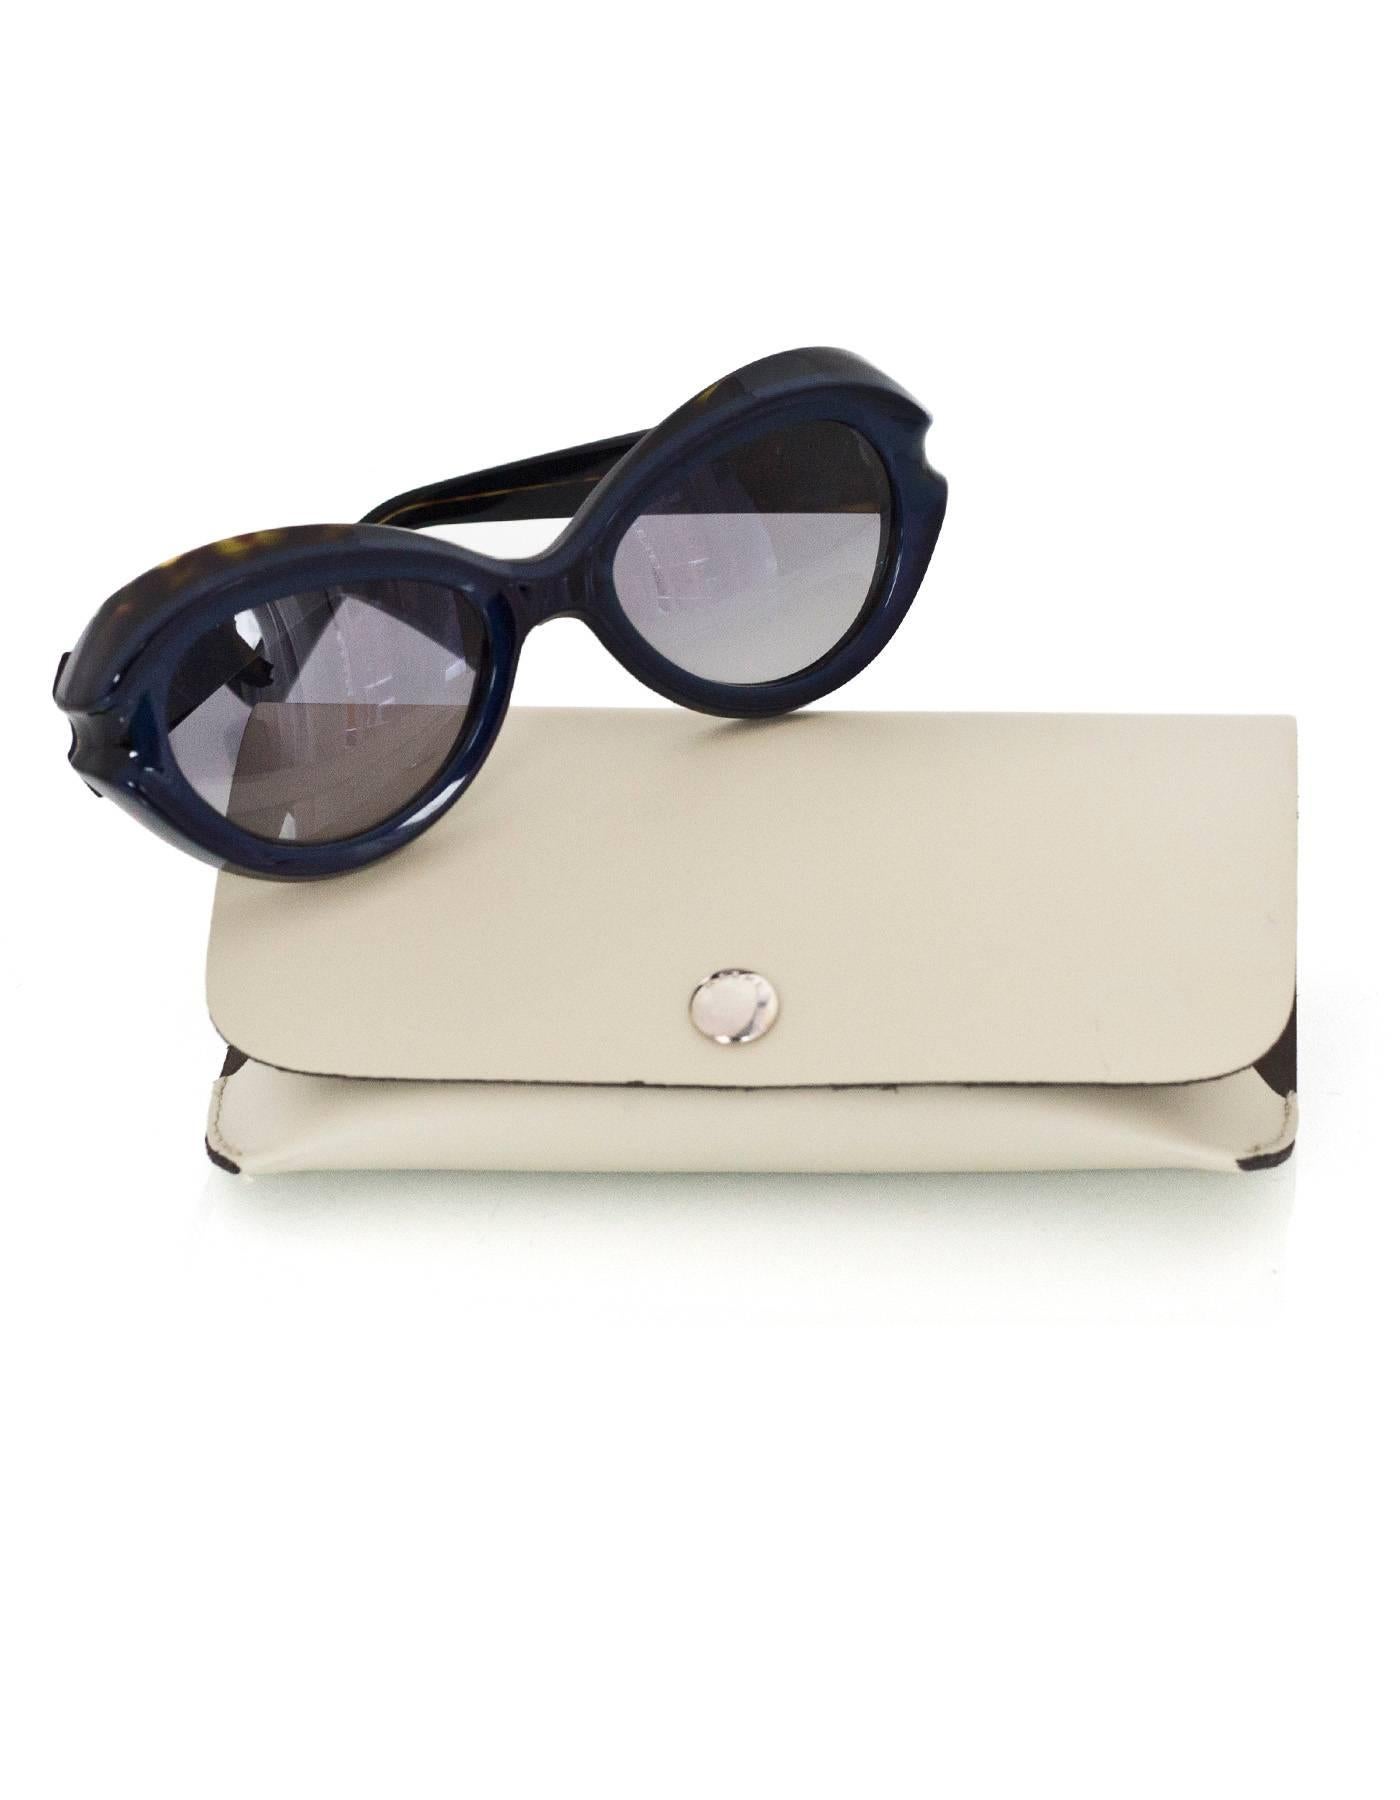 Marni Navy & Tortoise Sunglasses with Case 2